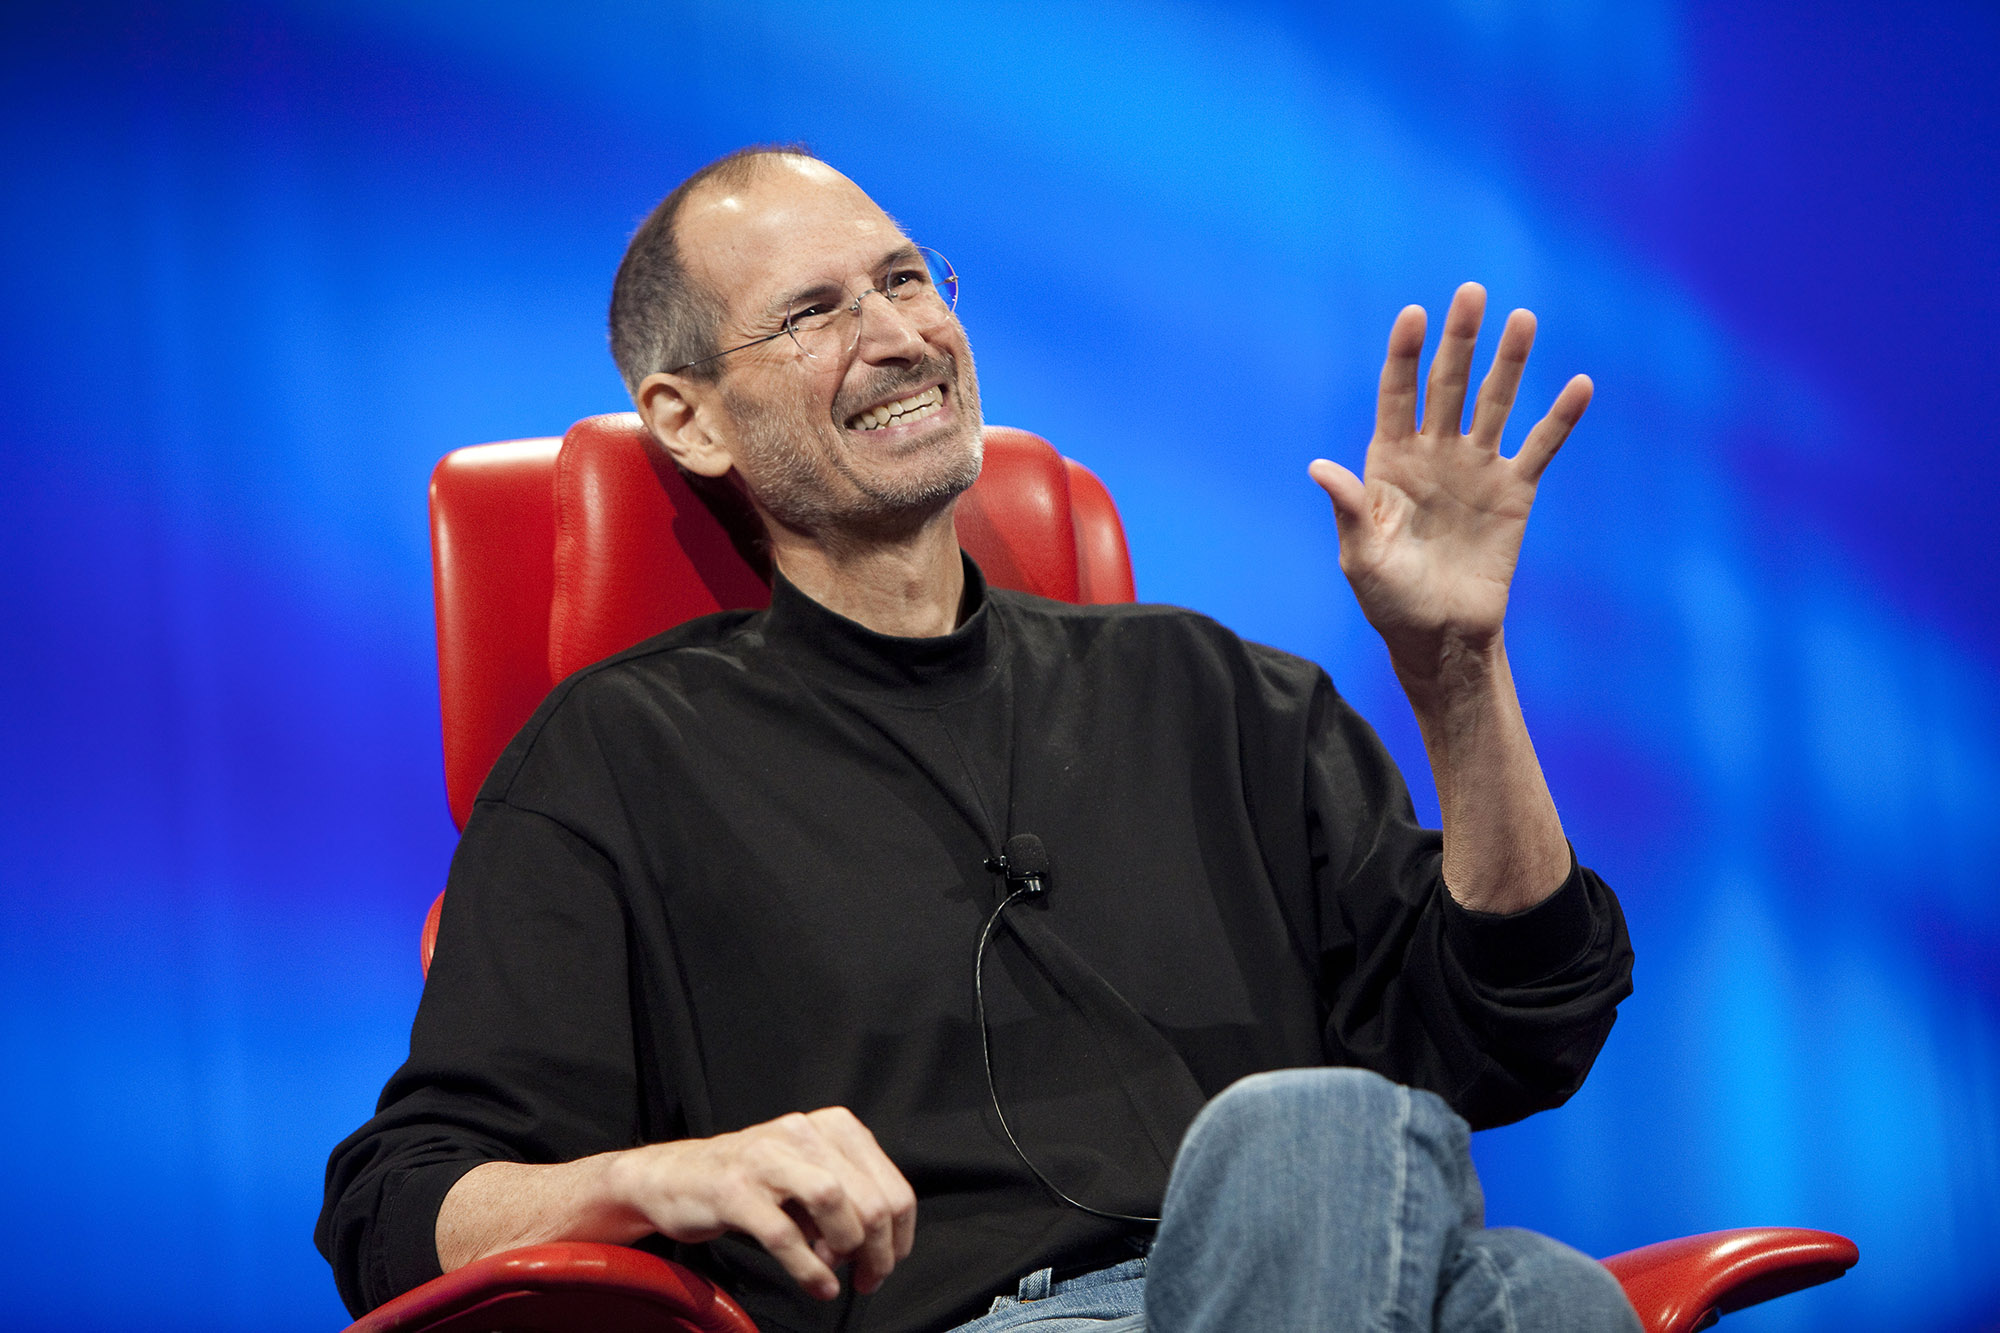 Steve Jobs' legacy lives on with highest U.S. civilian honor